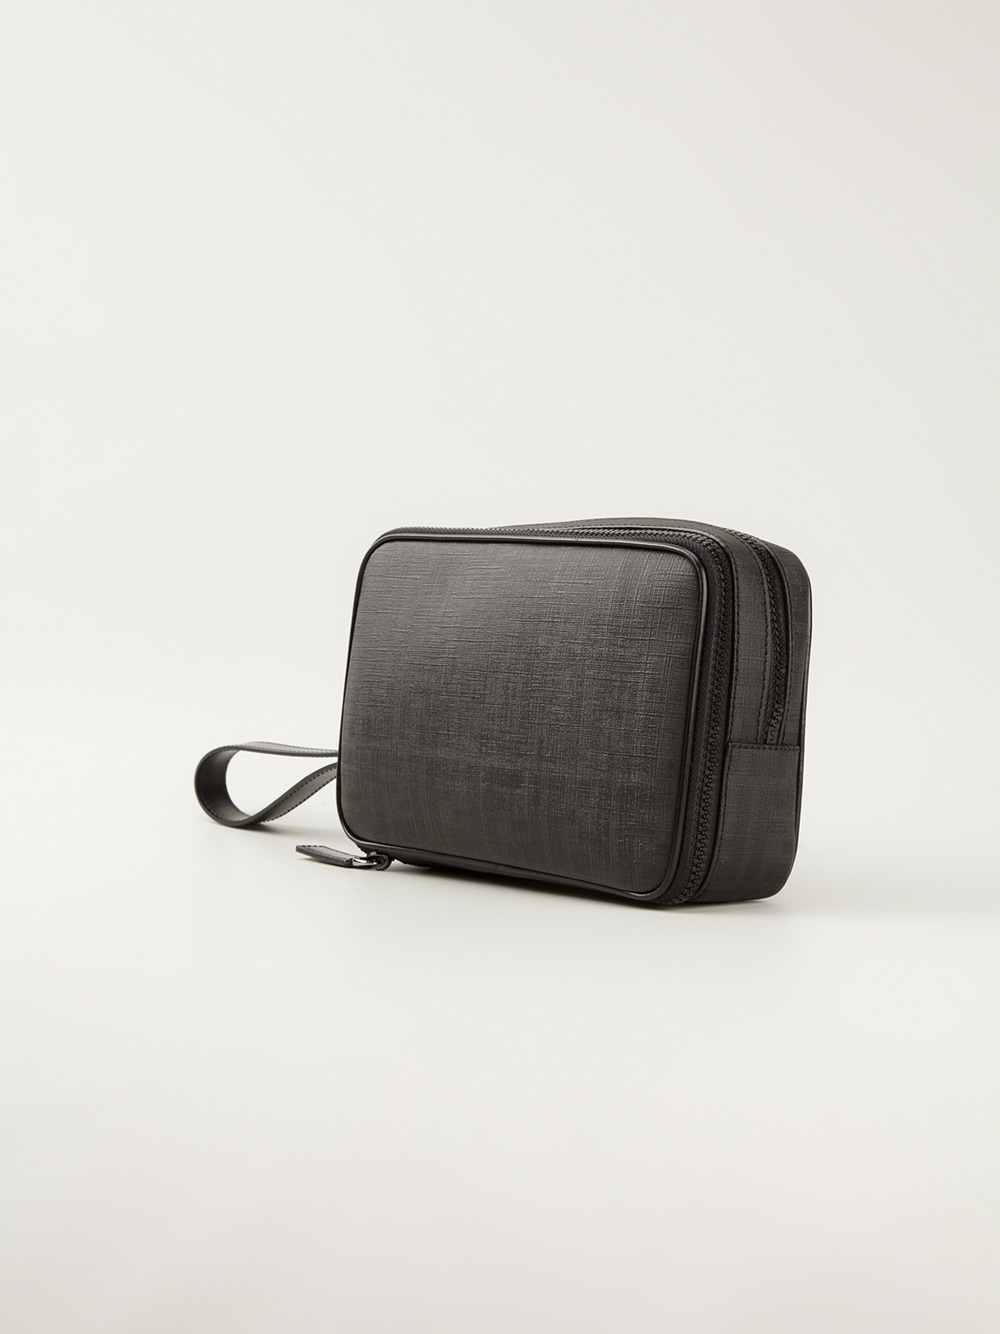 Lyst - Fendi Functional Clutch Bag in Black for Men